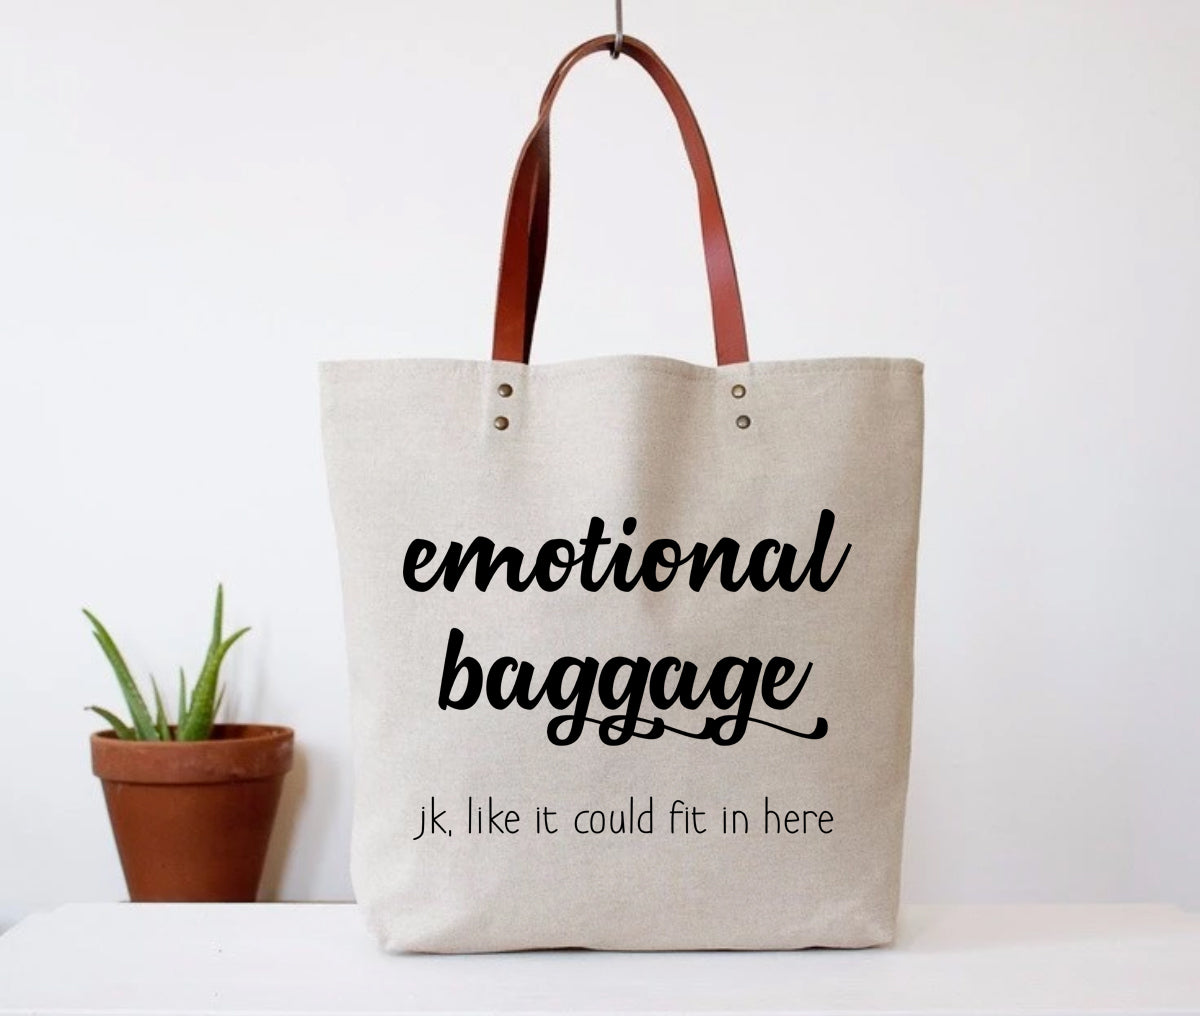 Emotional Baggage Tote Bag by Fun Club